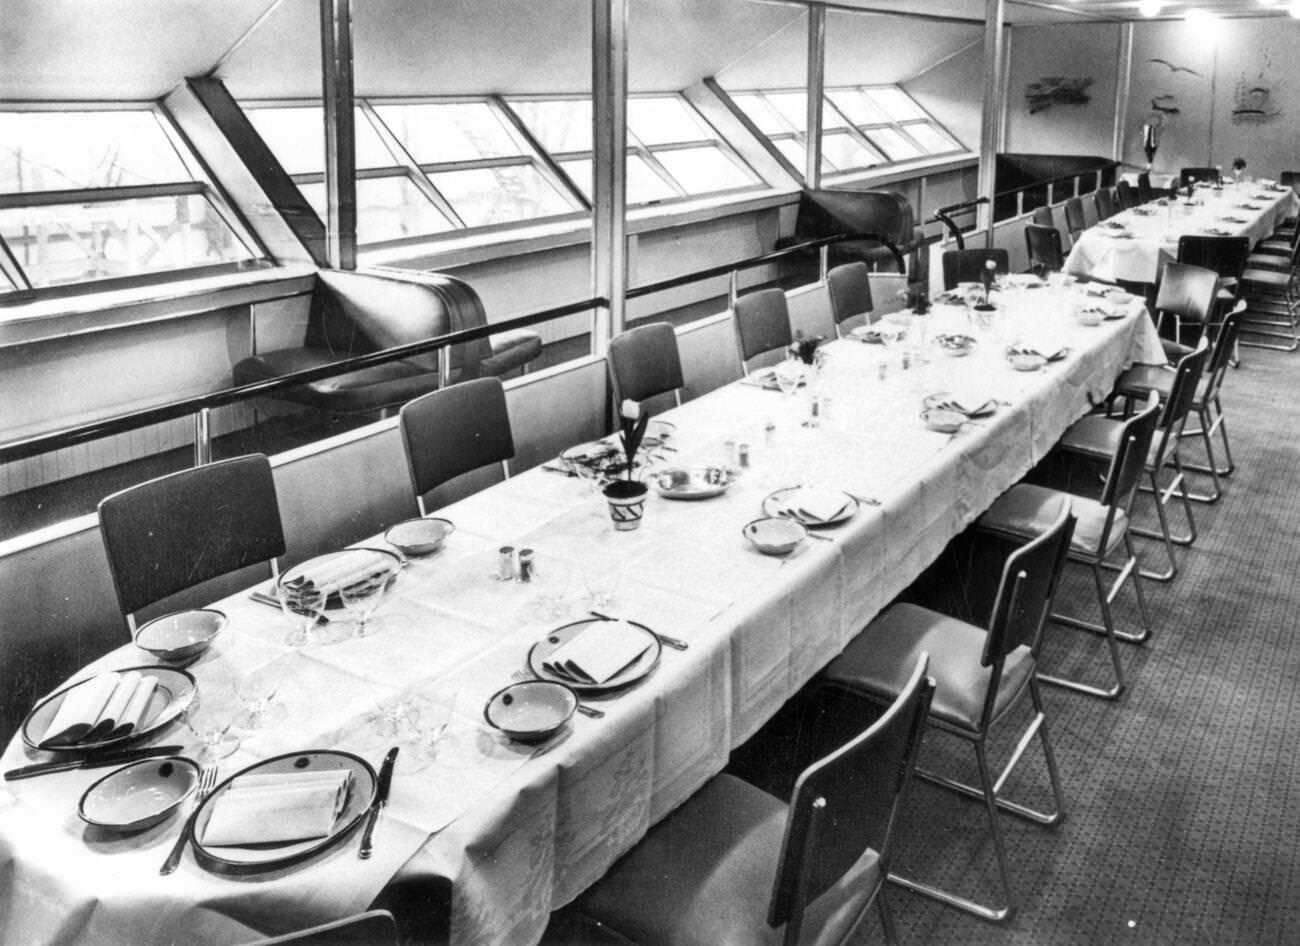 Dining Hall Interior of Zeppelin LZ 129 "Hindenburg", 1936